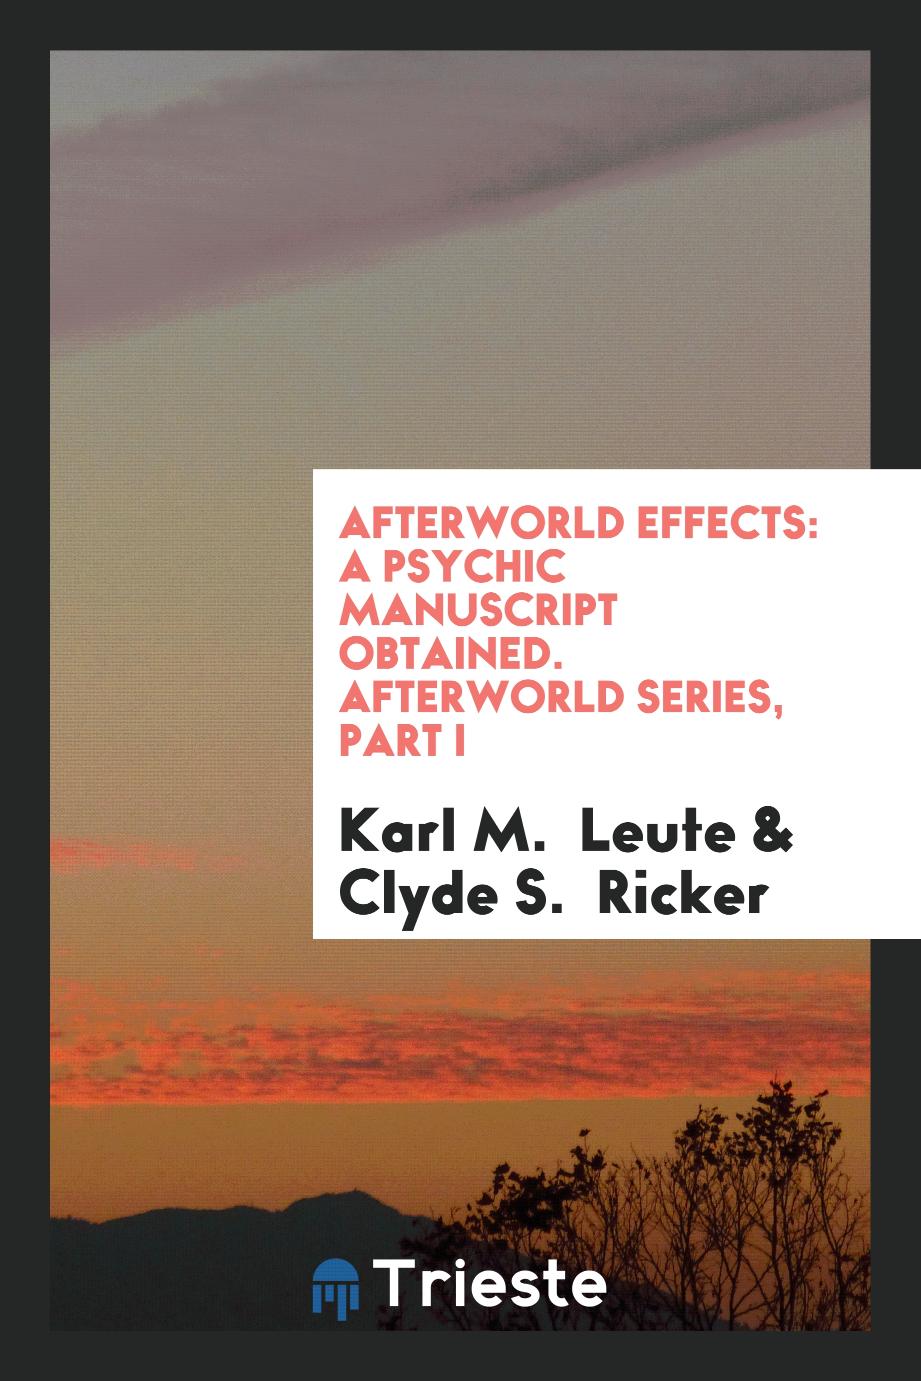 Afterworld Effects: A Psychic Manuscript Obtained. Afterworld Series, Part I